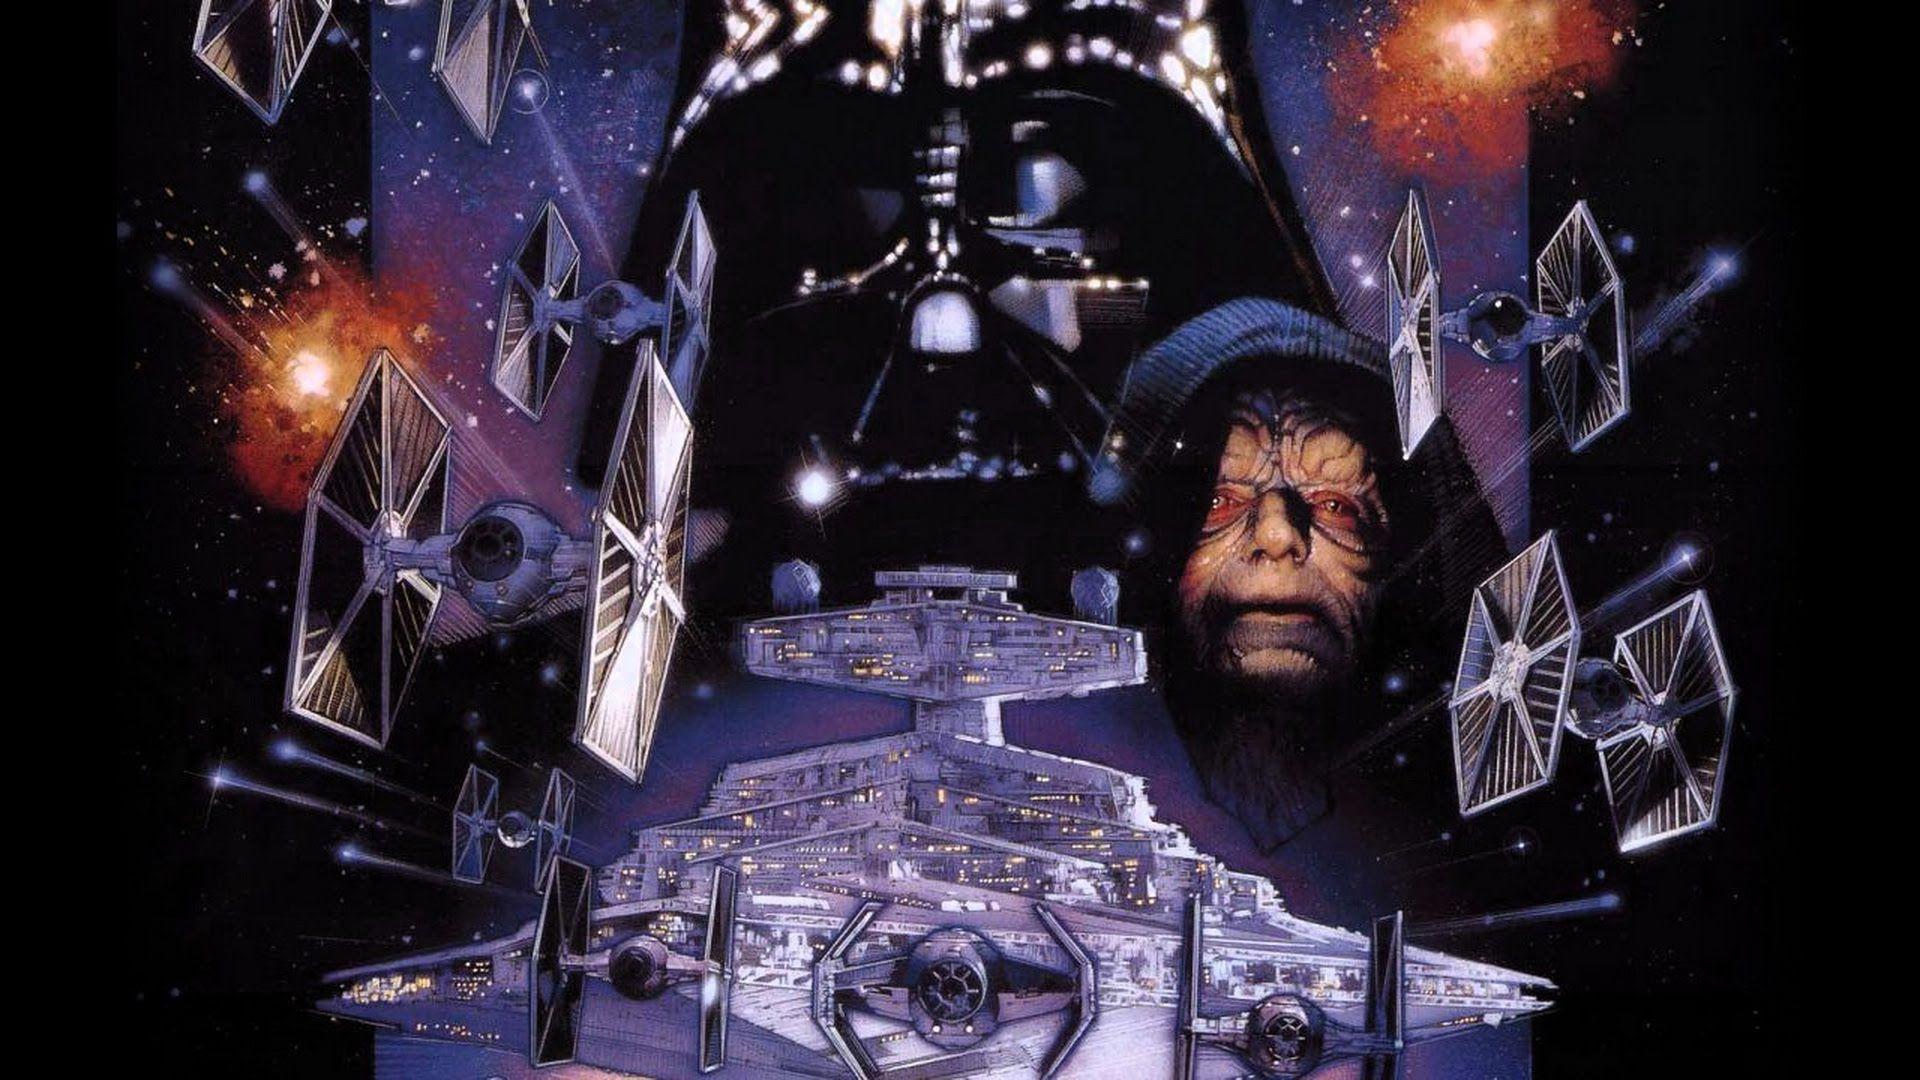 Unboxing: Star Wars. Episode V: The Empire Strikes Back